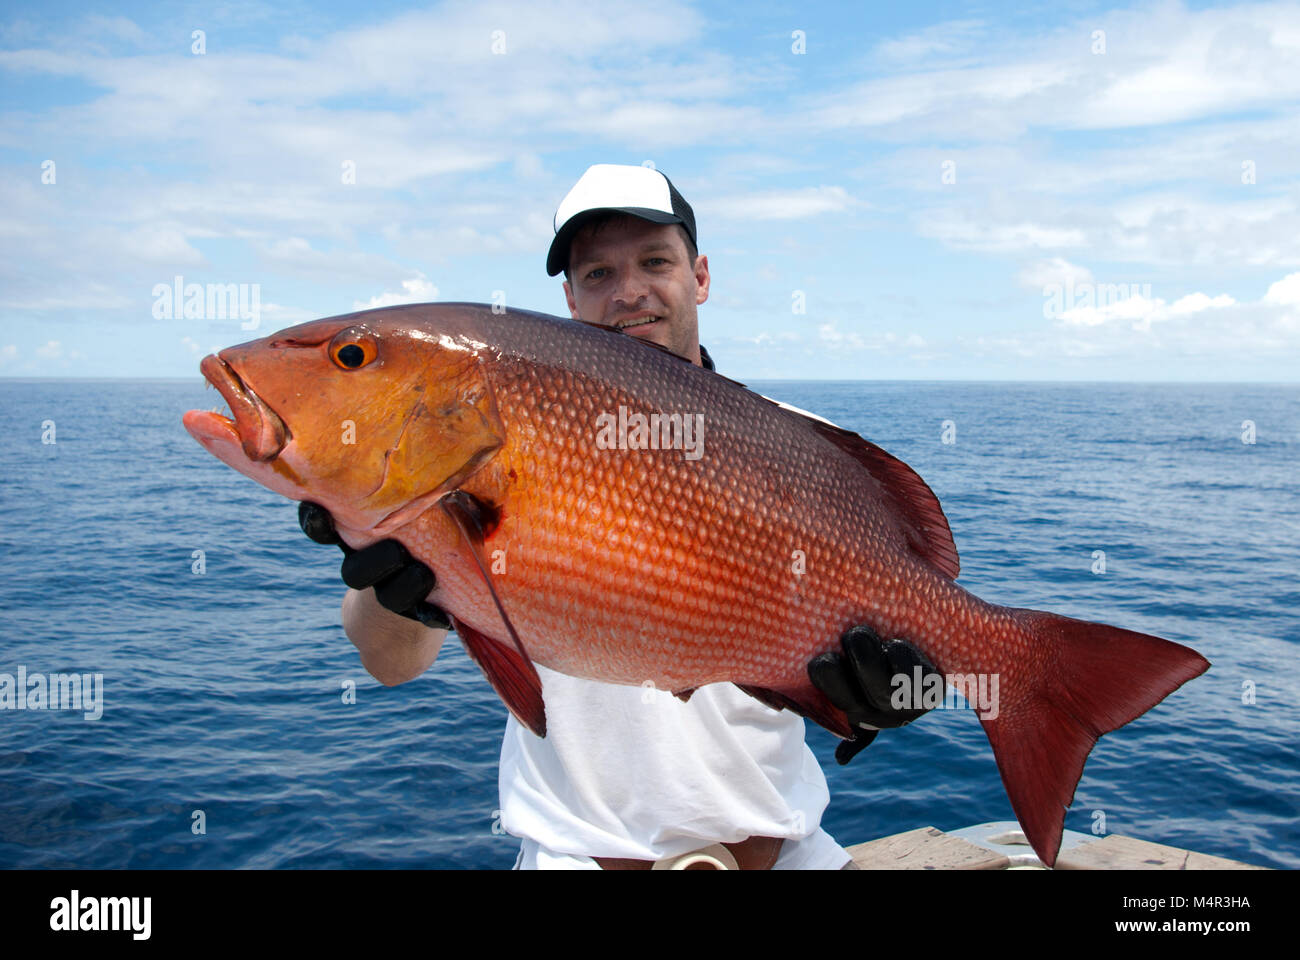 https://c8.alamy.com/comp/M4R3HA/lucky-fisherman-holding-a-beautiful-red-snapper-deep-sea-fishing-big-M4R3HA.jpg